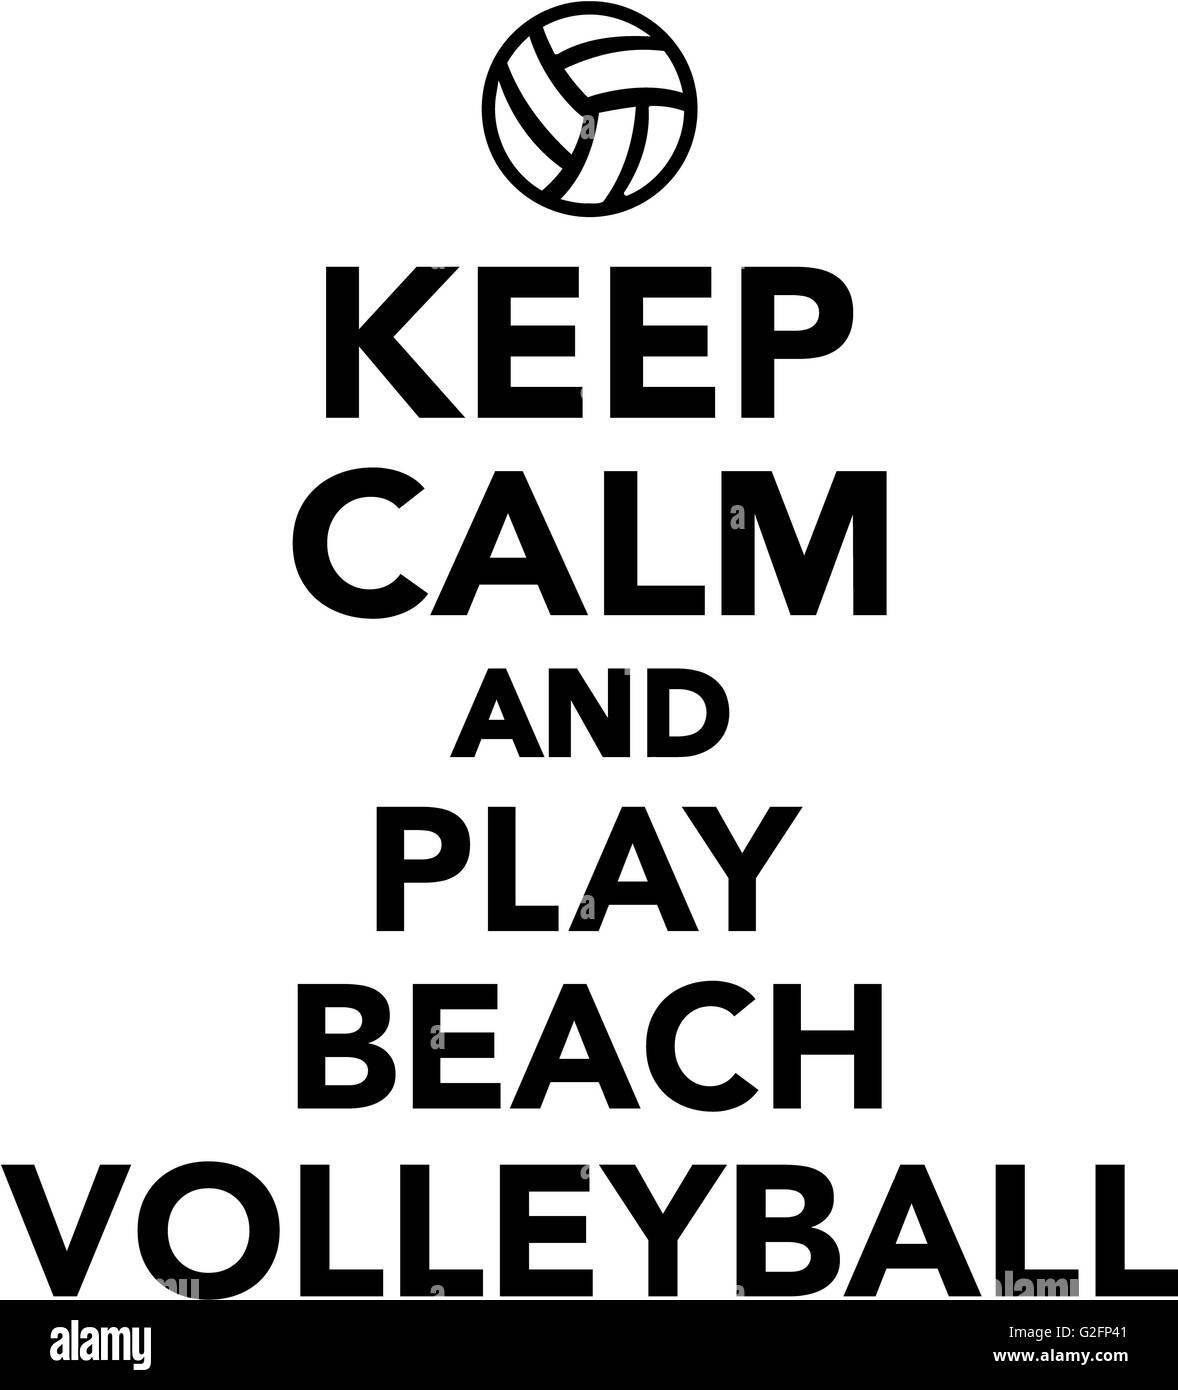 Beachvolleyball team Black and White Stock Photos & Images - Alamy